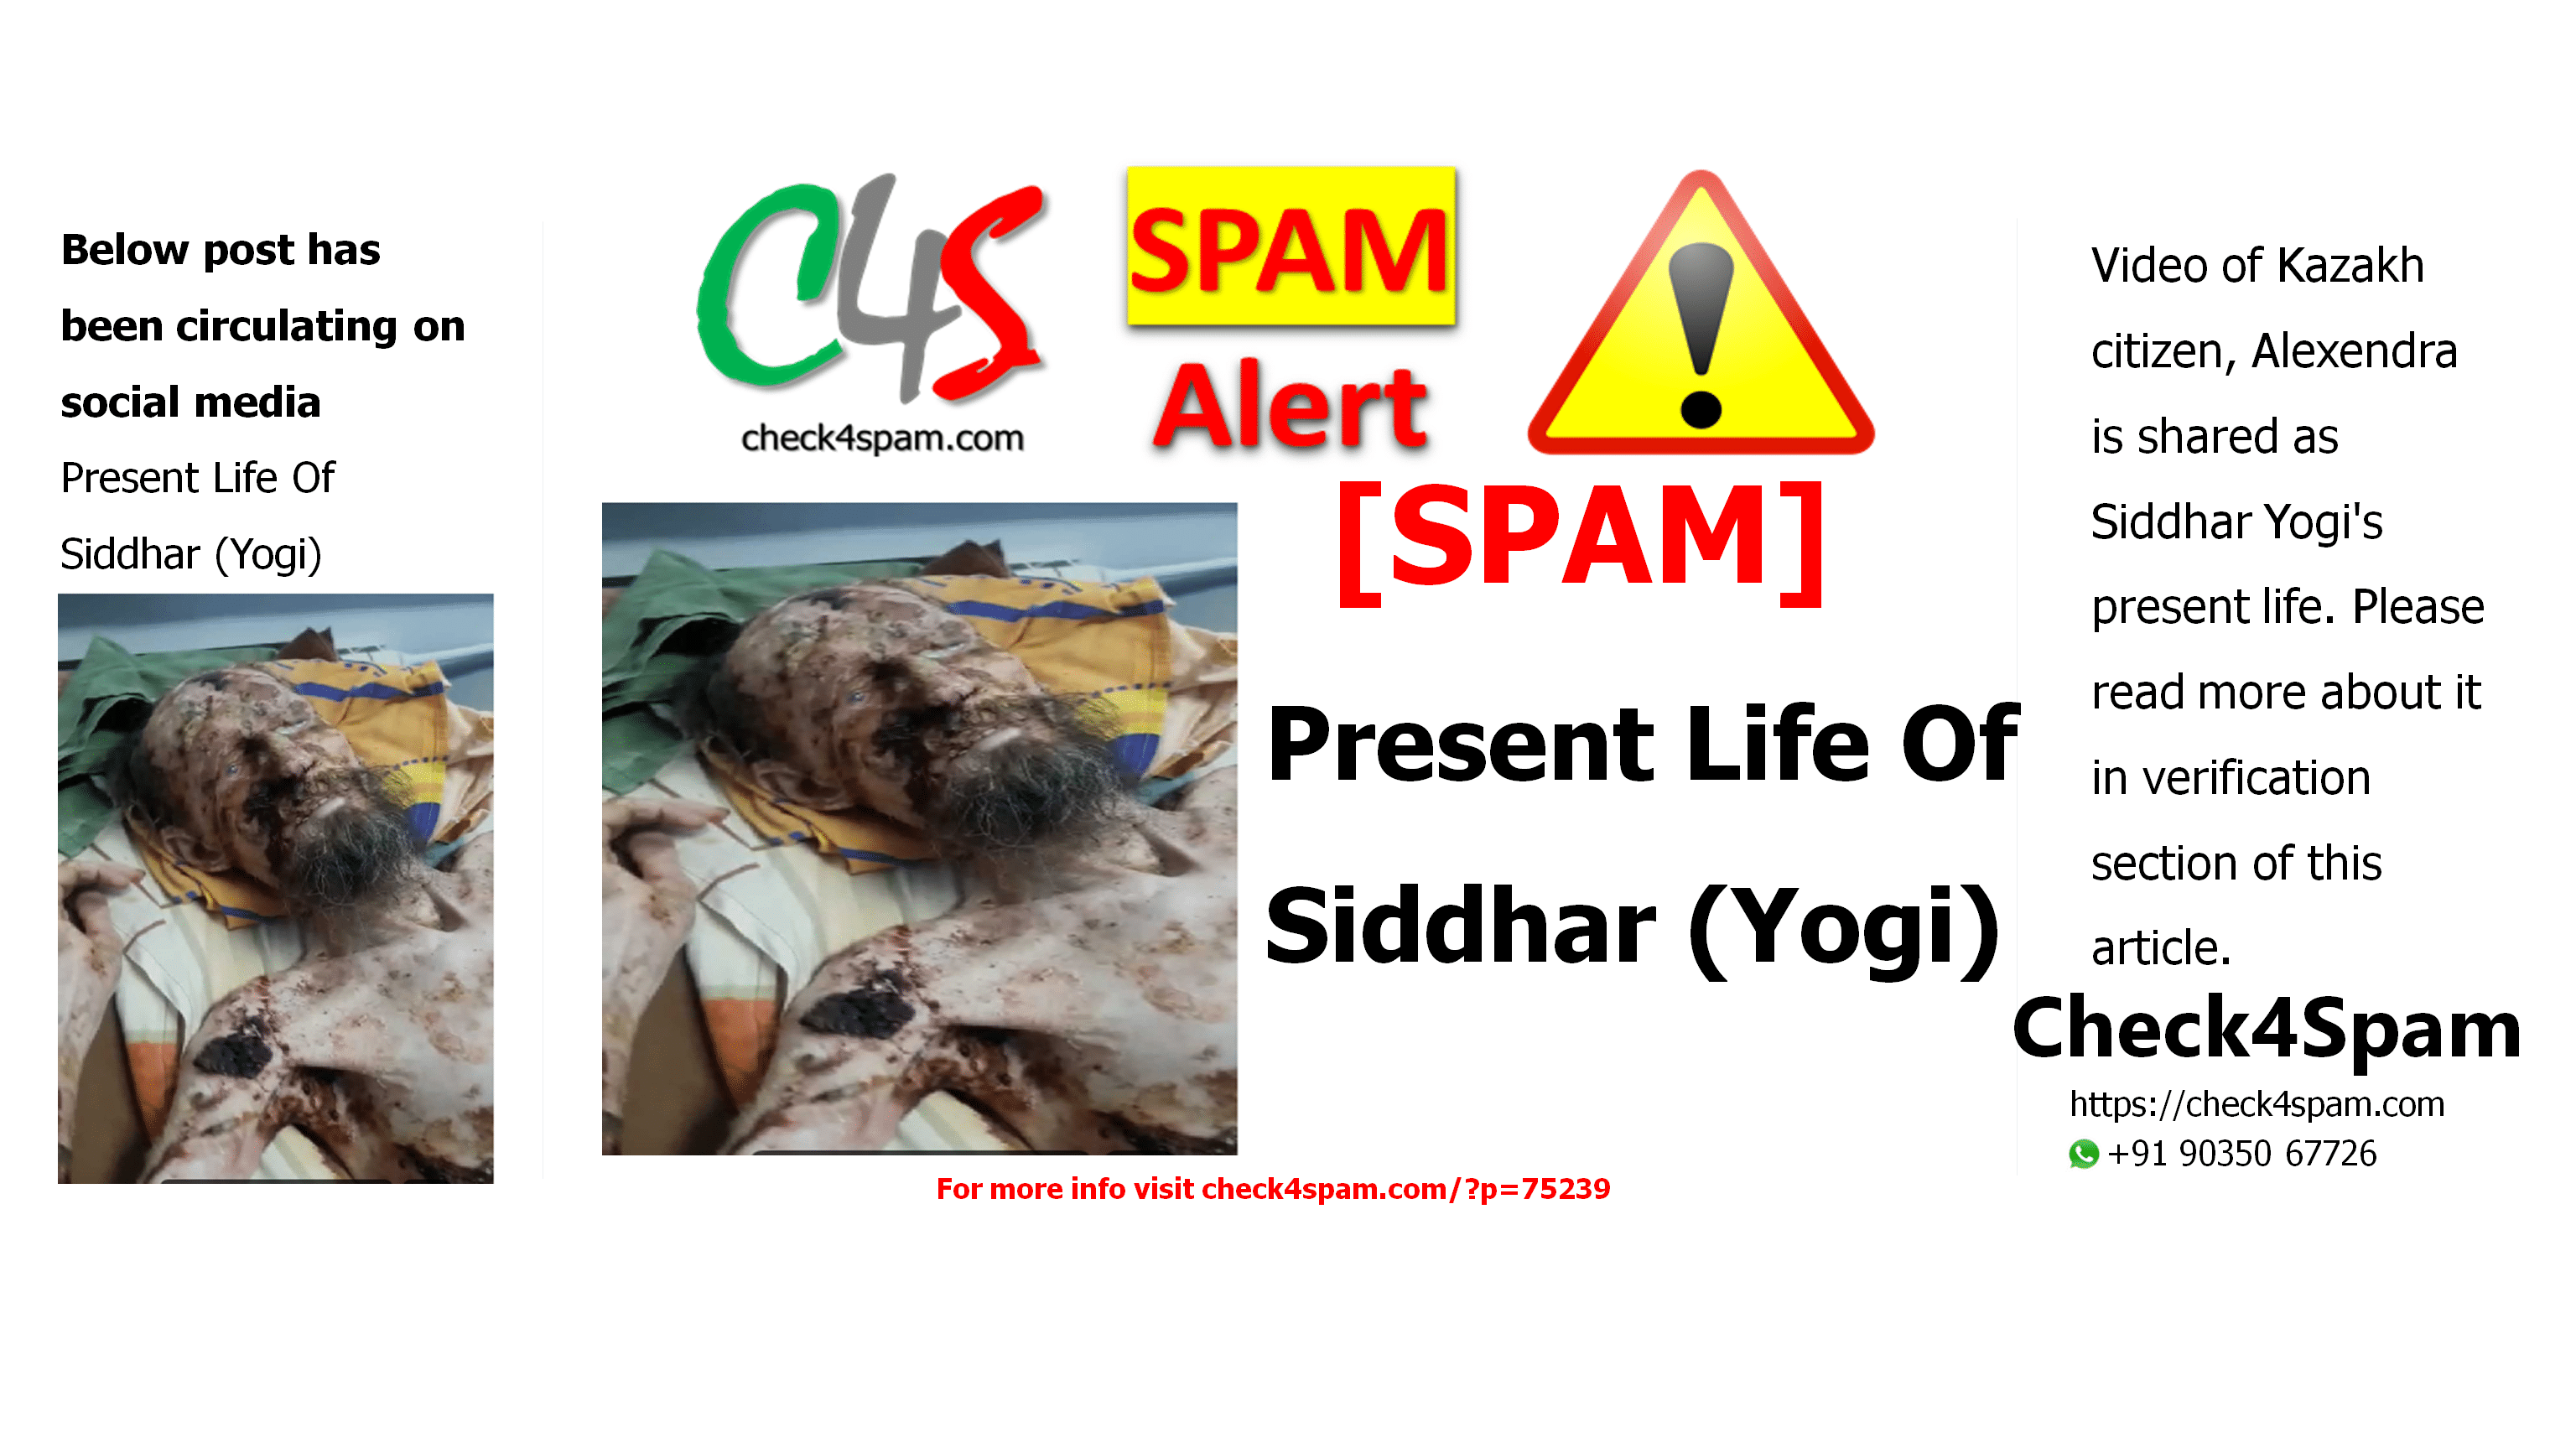 Present Life Of Siddhar (Yogi)